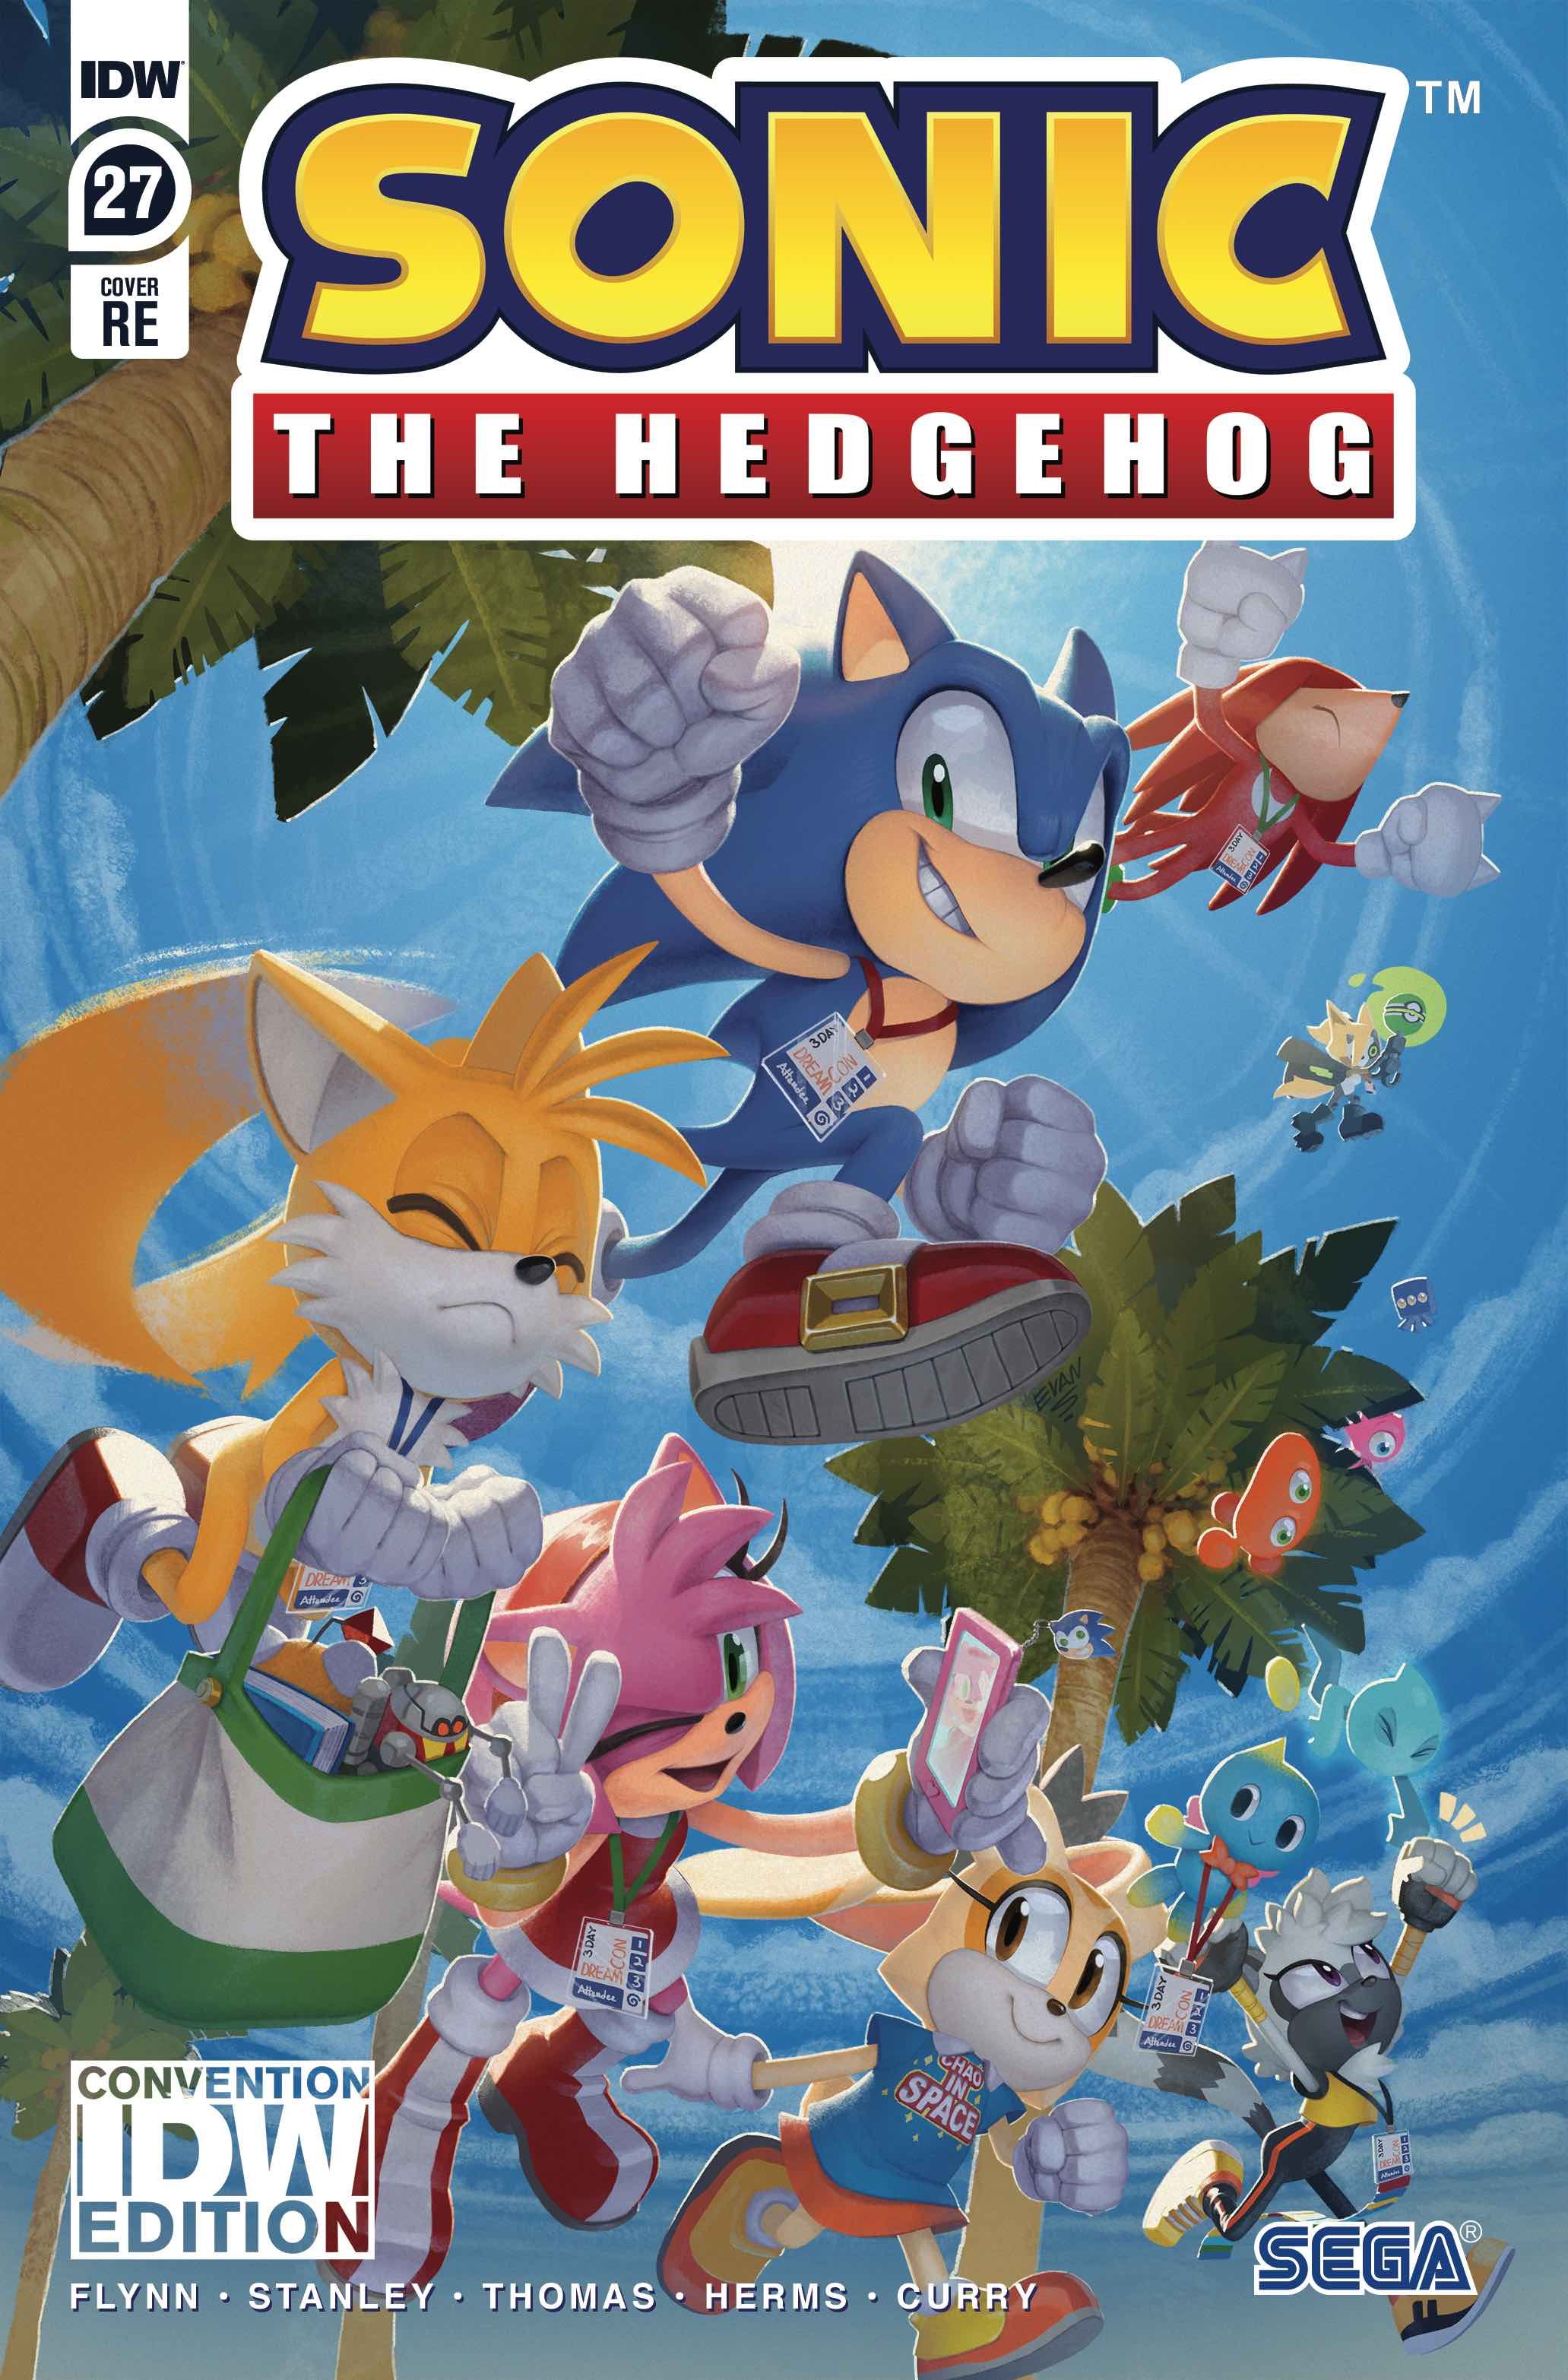 Sonic the Hedgehog (IDW) - Classic Era / Characters - TV Tropes